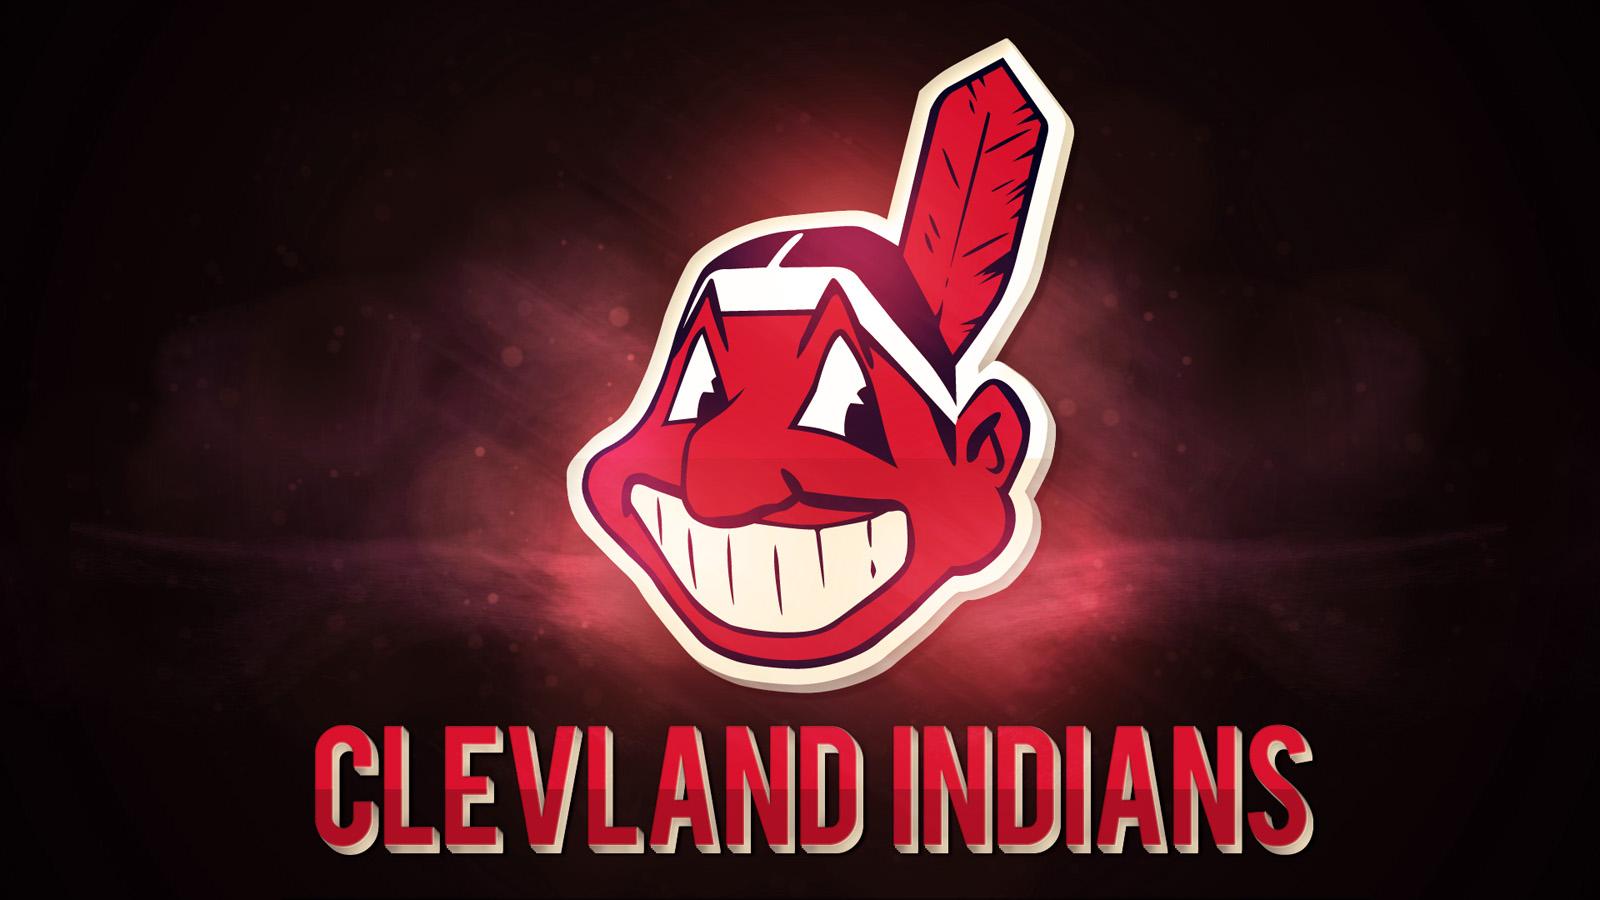 Sports Cleveland Indians 4k Ultra HD Wallpaper